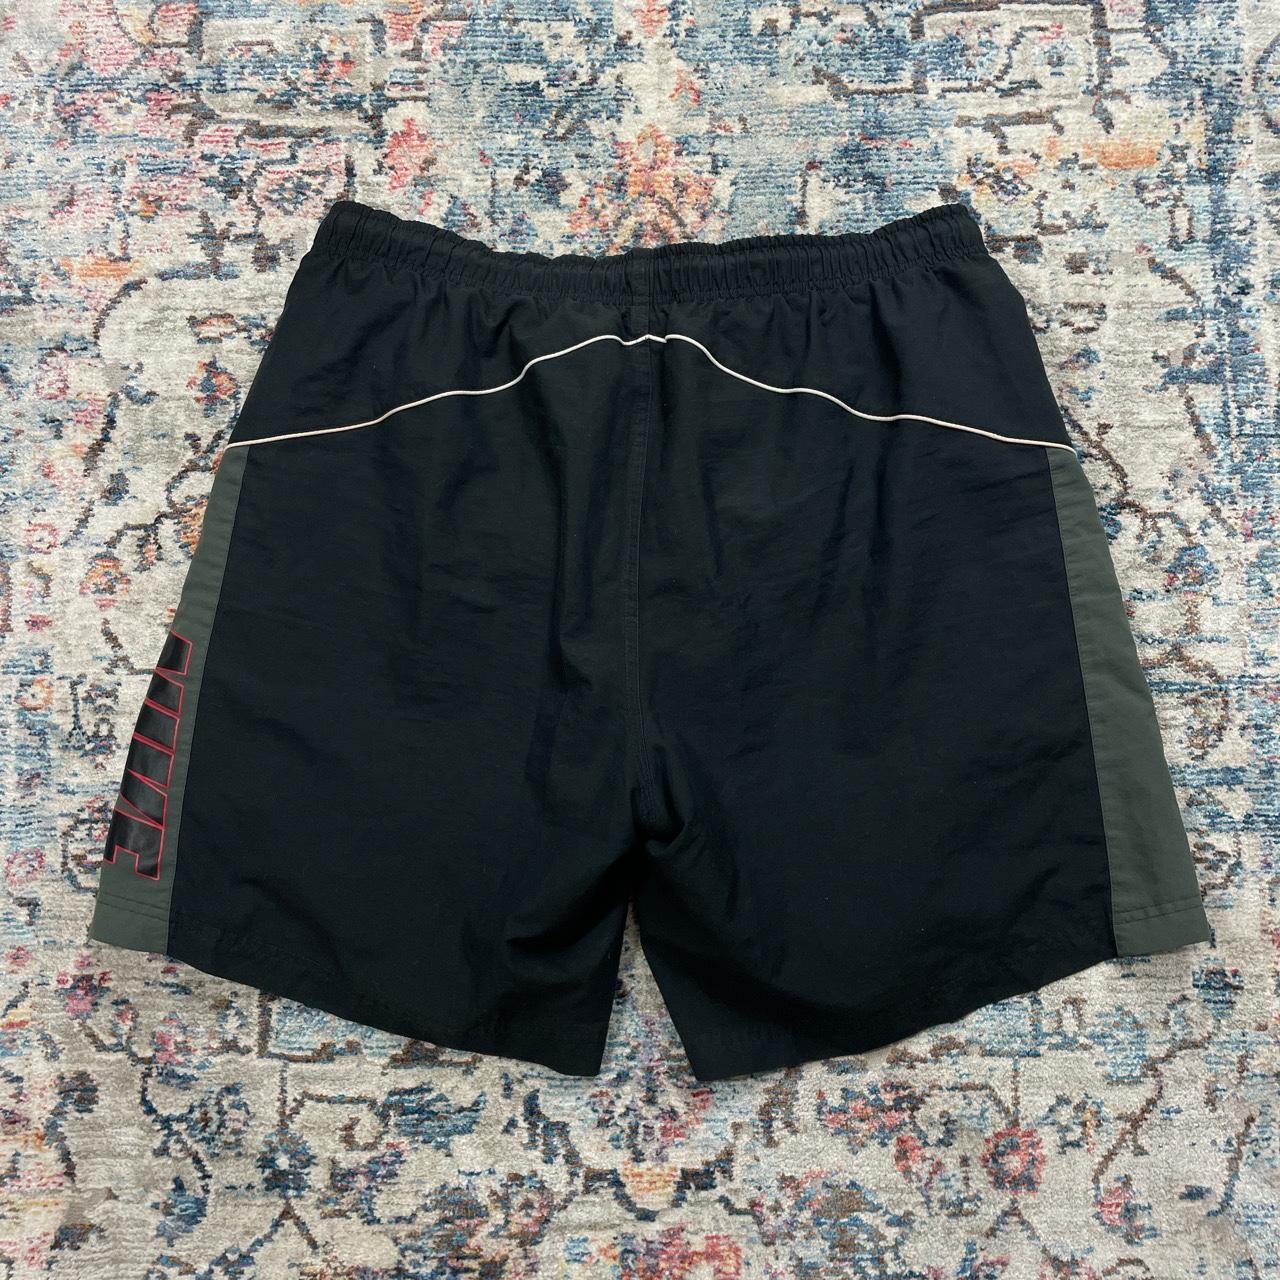 Vintage Nike black shorts